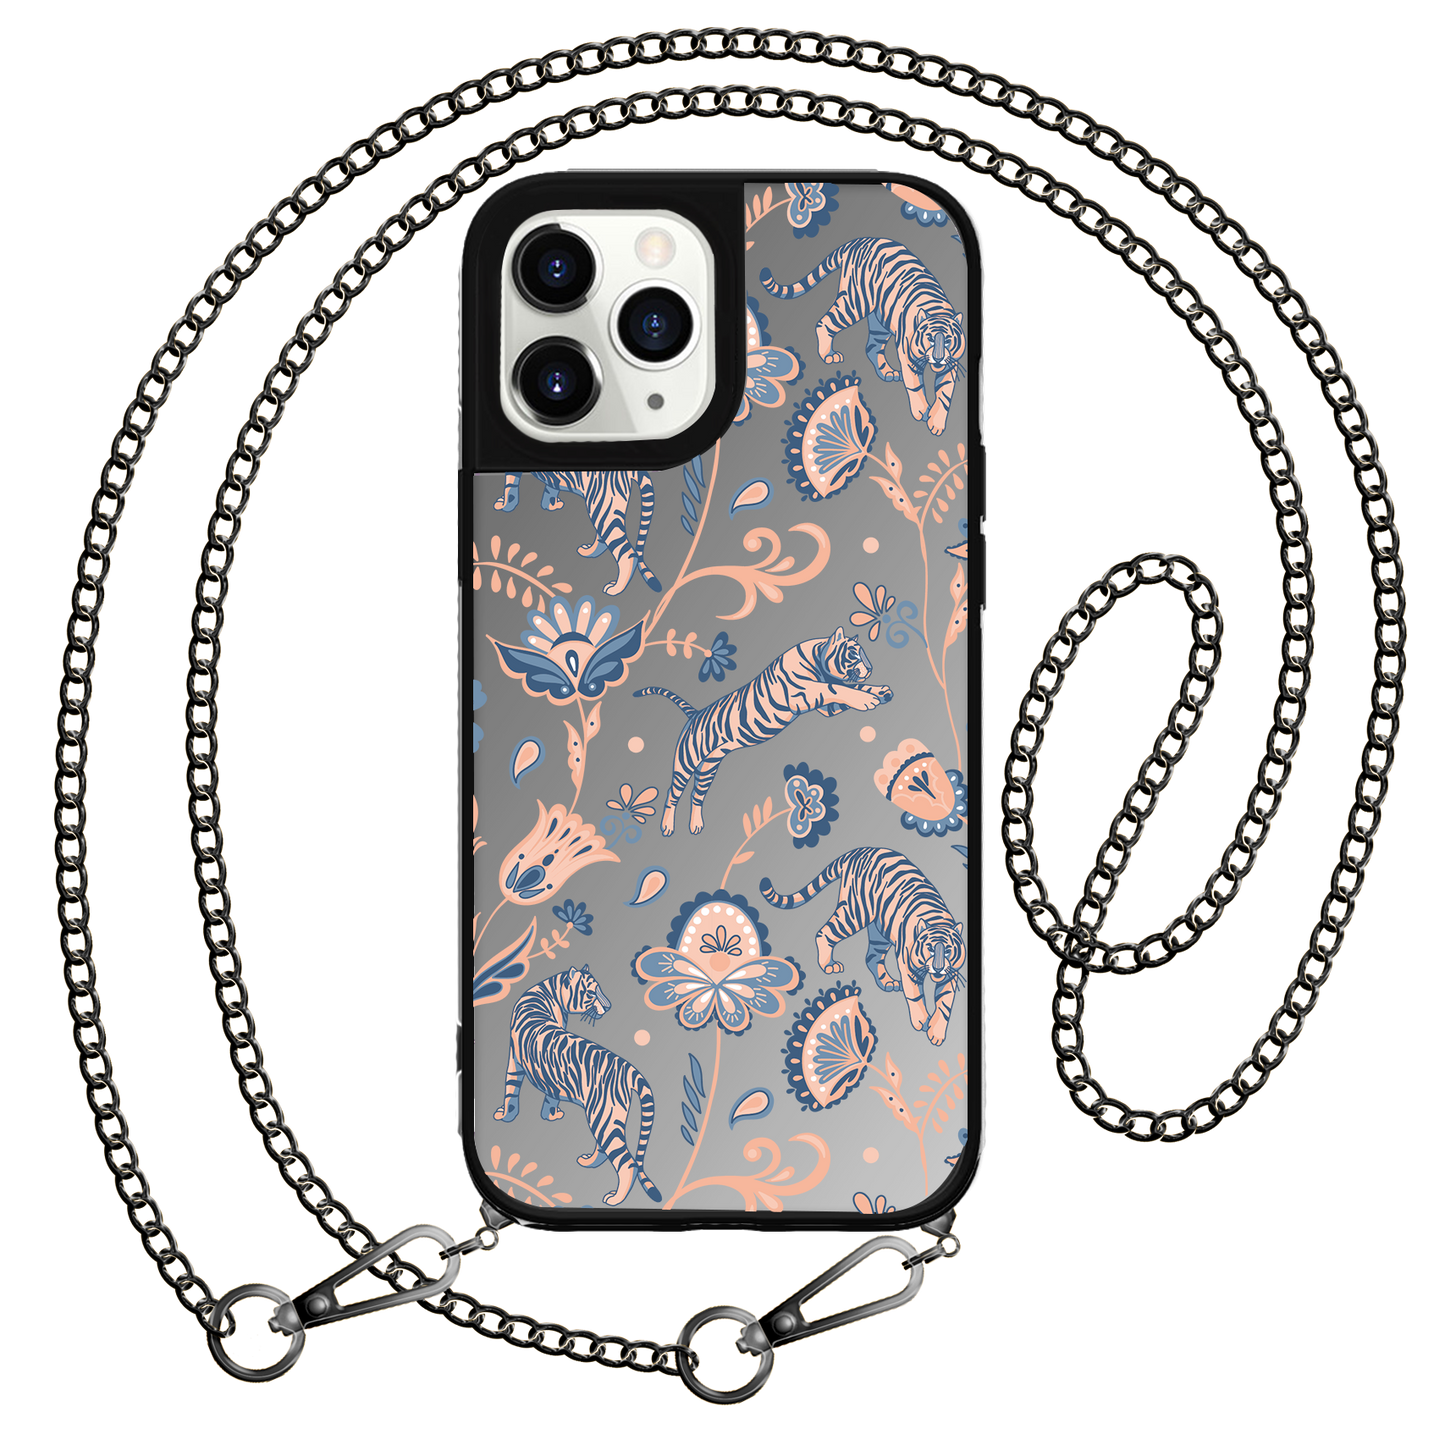 iPhone Mirror Grip Case - Tiger & Floral 5.0